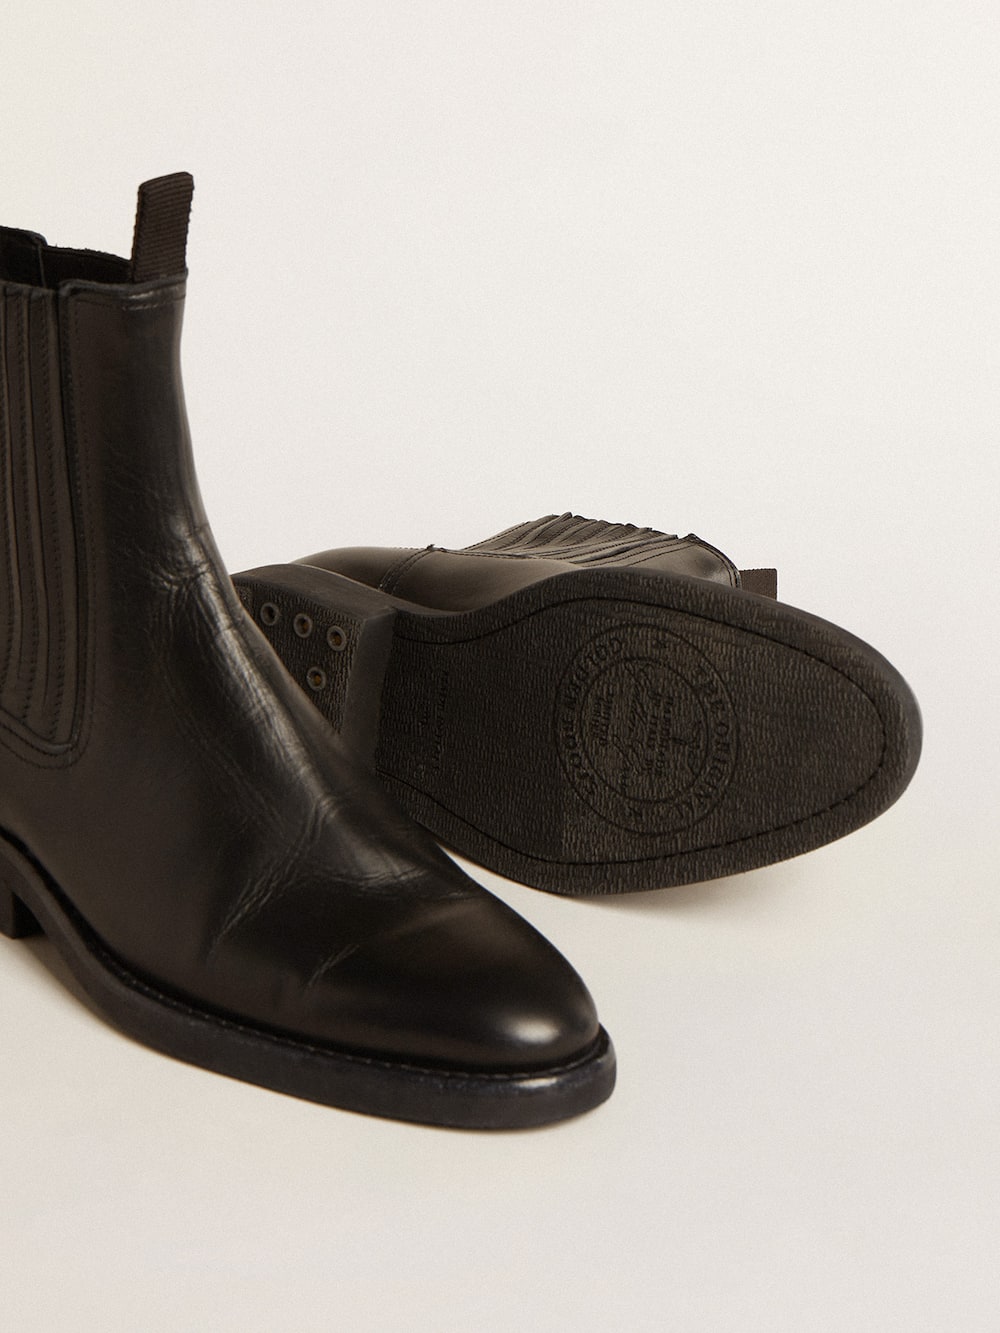 Golden Goose - Women’s Chelsea boots in black leather in 